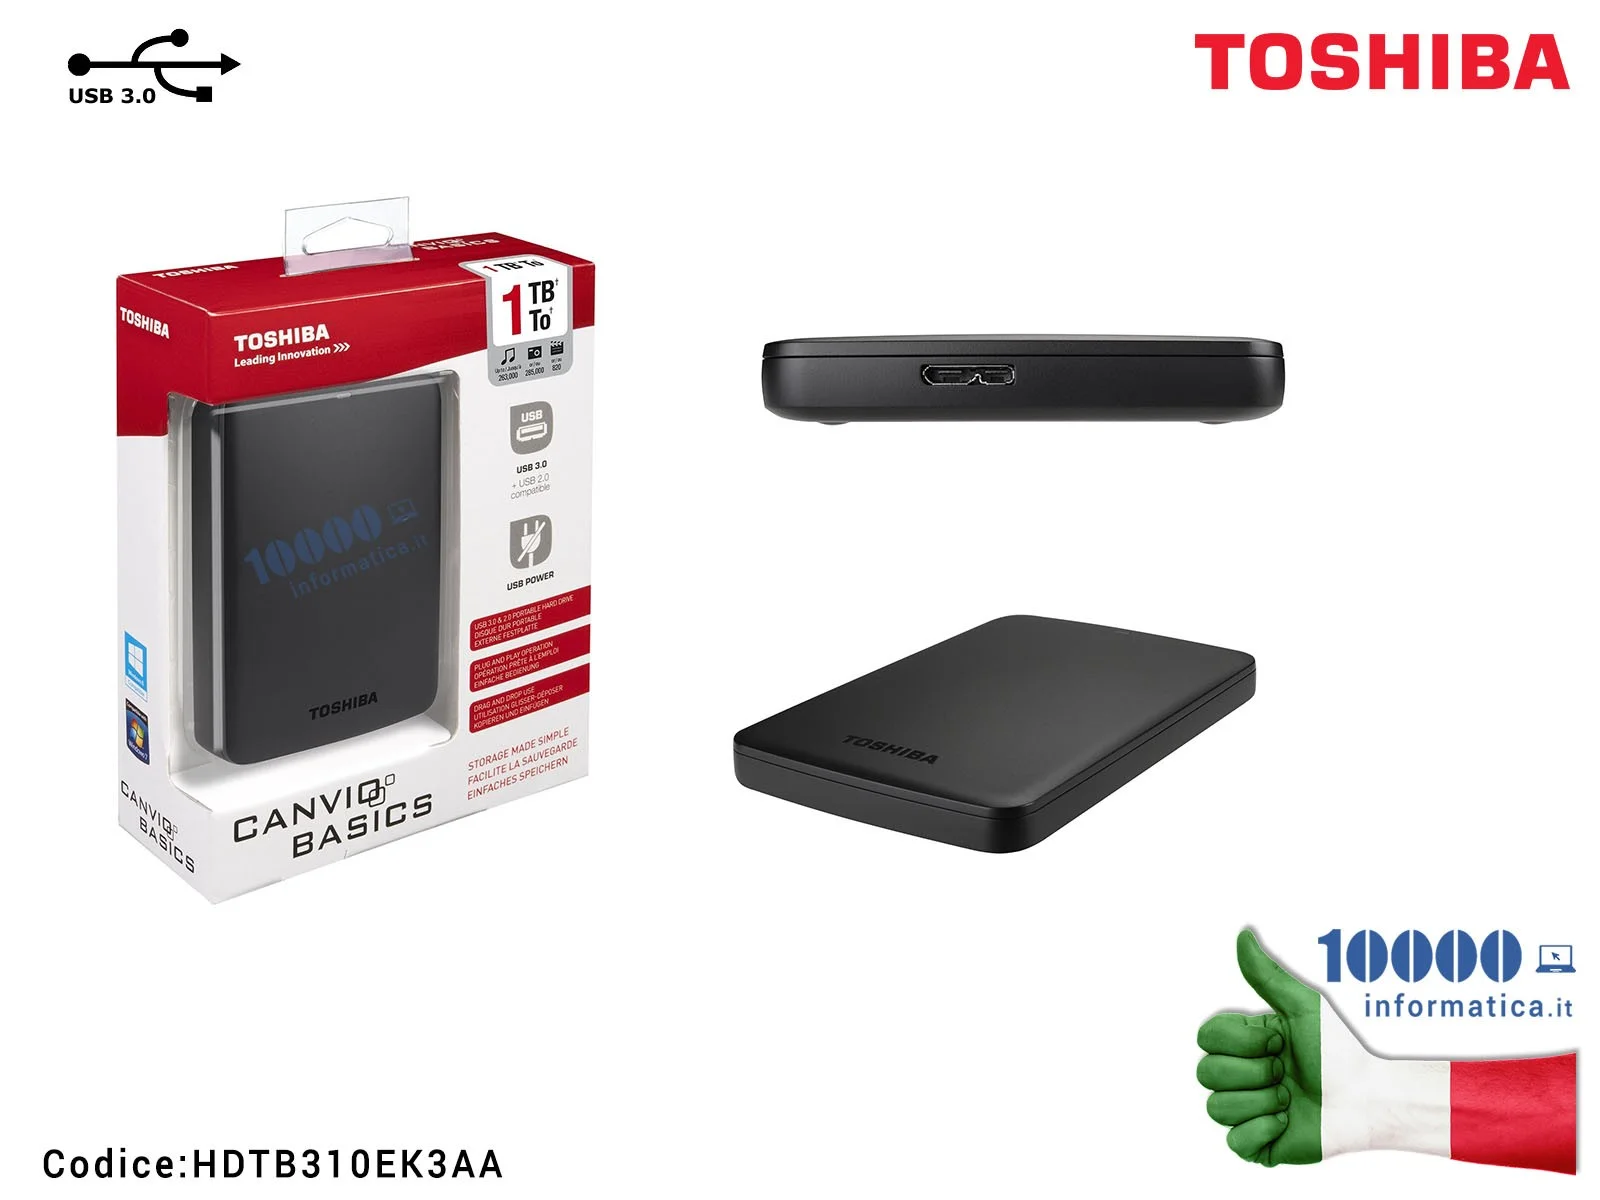 HDTB310EK3AA Hard Disk Esterno TOSHIBA USB 3.0 1TB 2,5 canvio basics